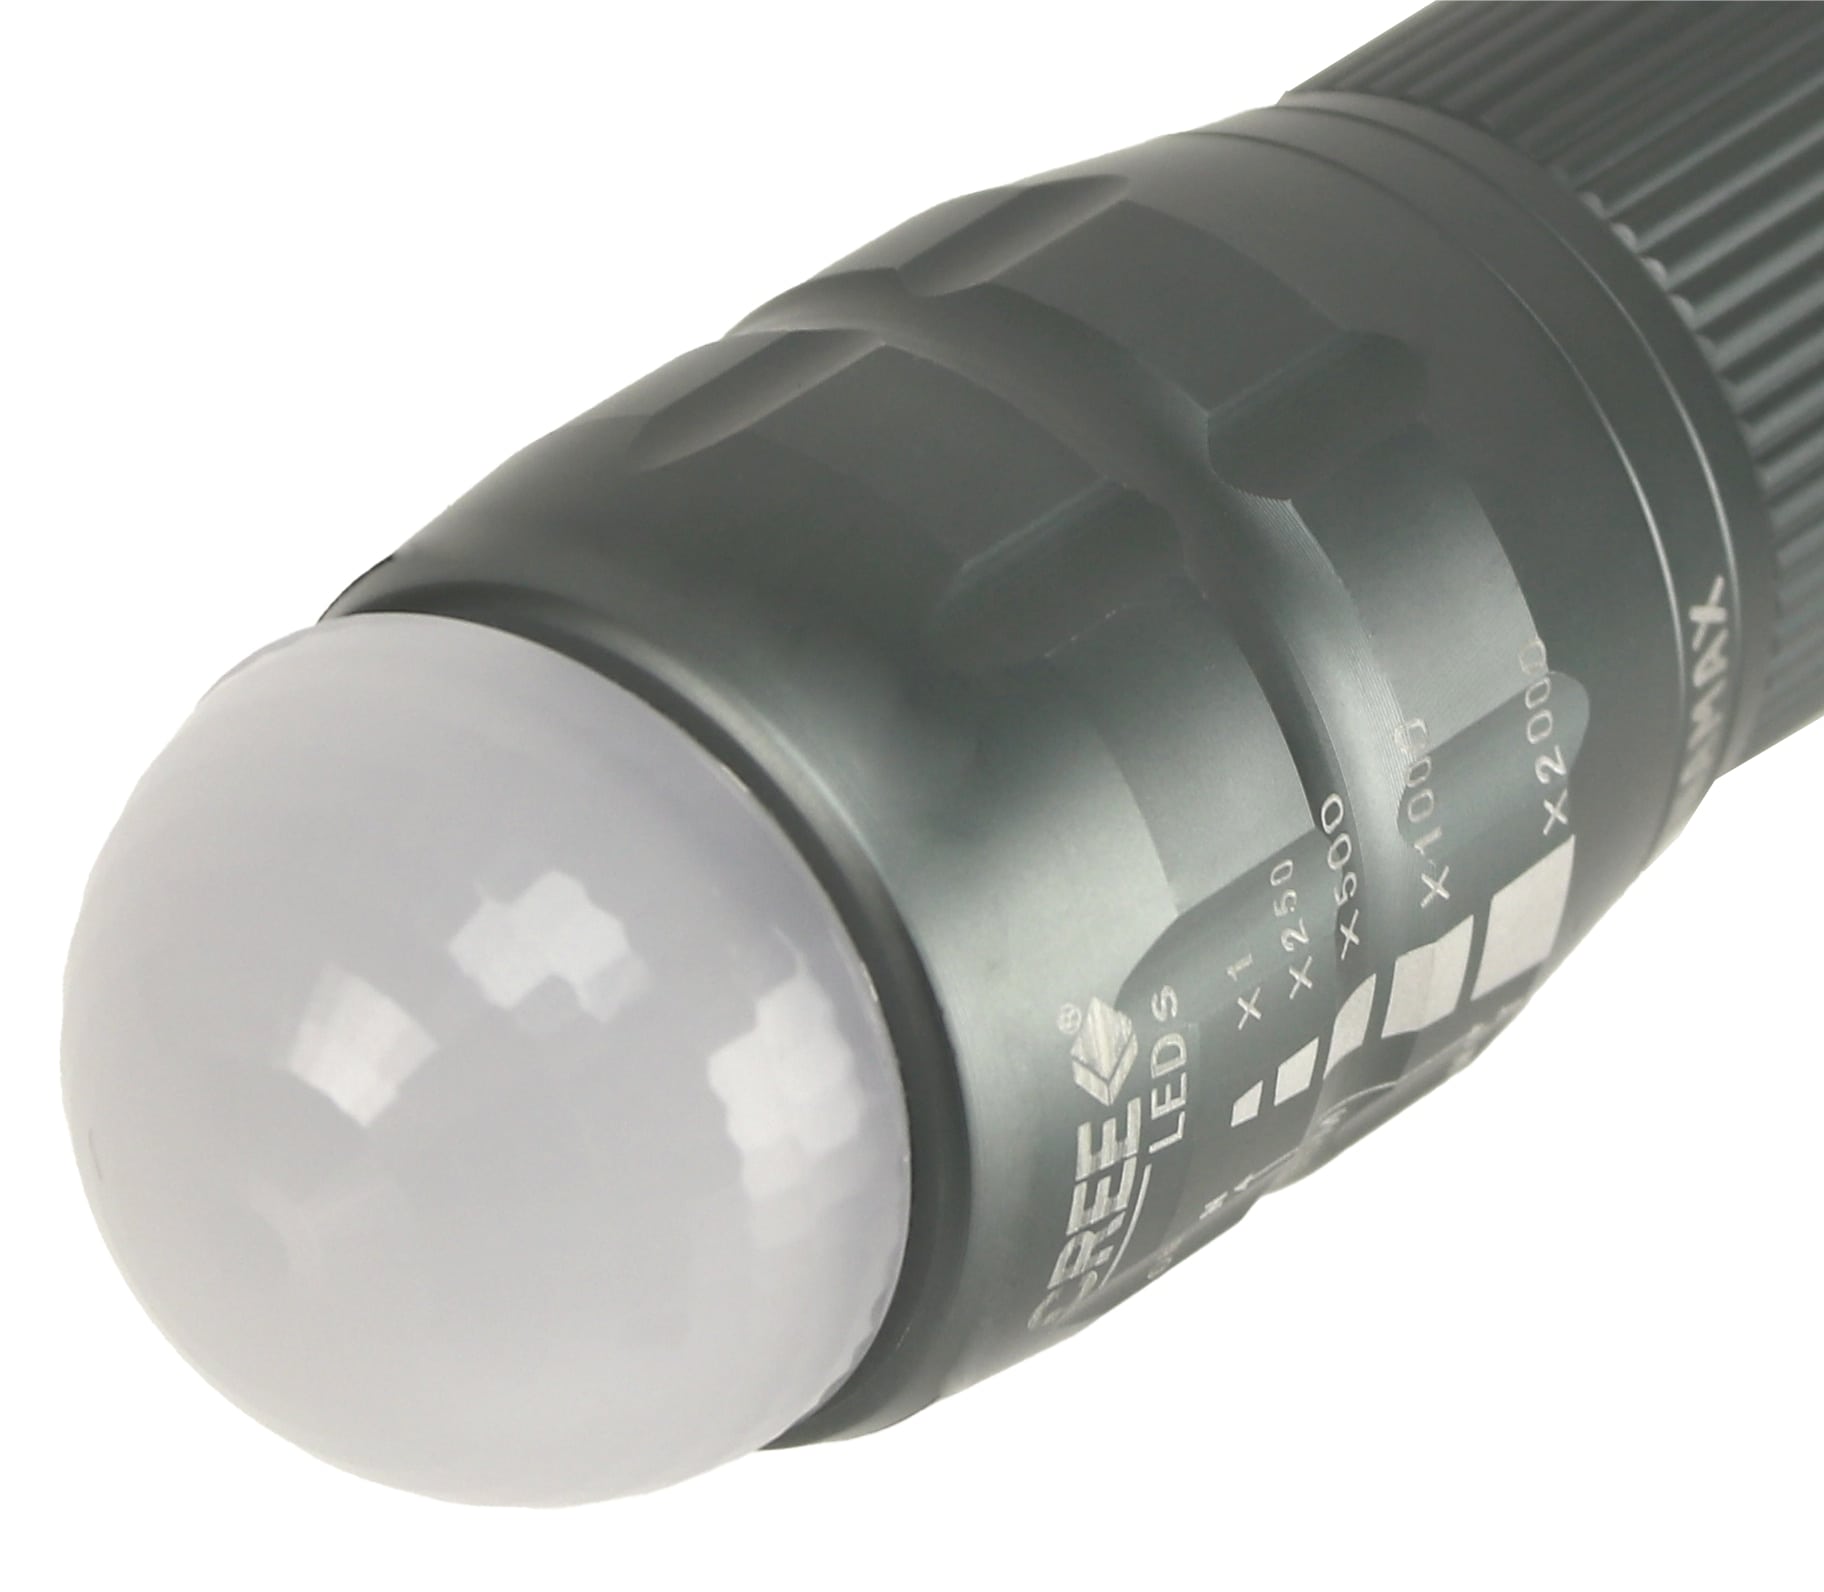 LED-Taschenlampe, WK502, Alu  grau, 5 W, CREE LED